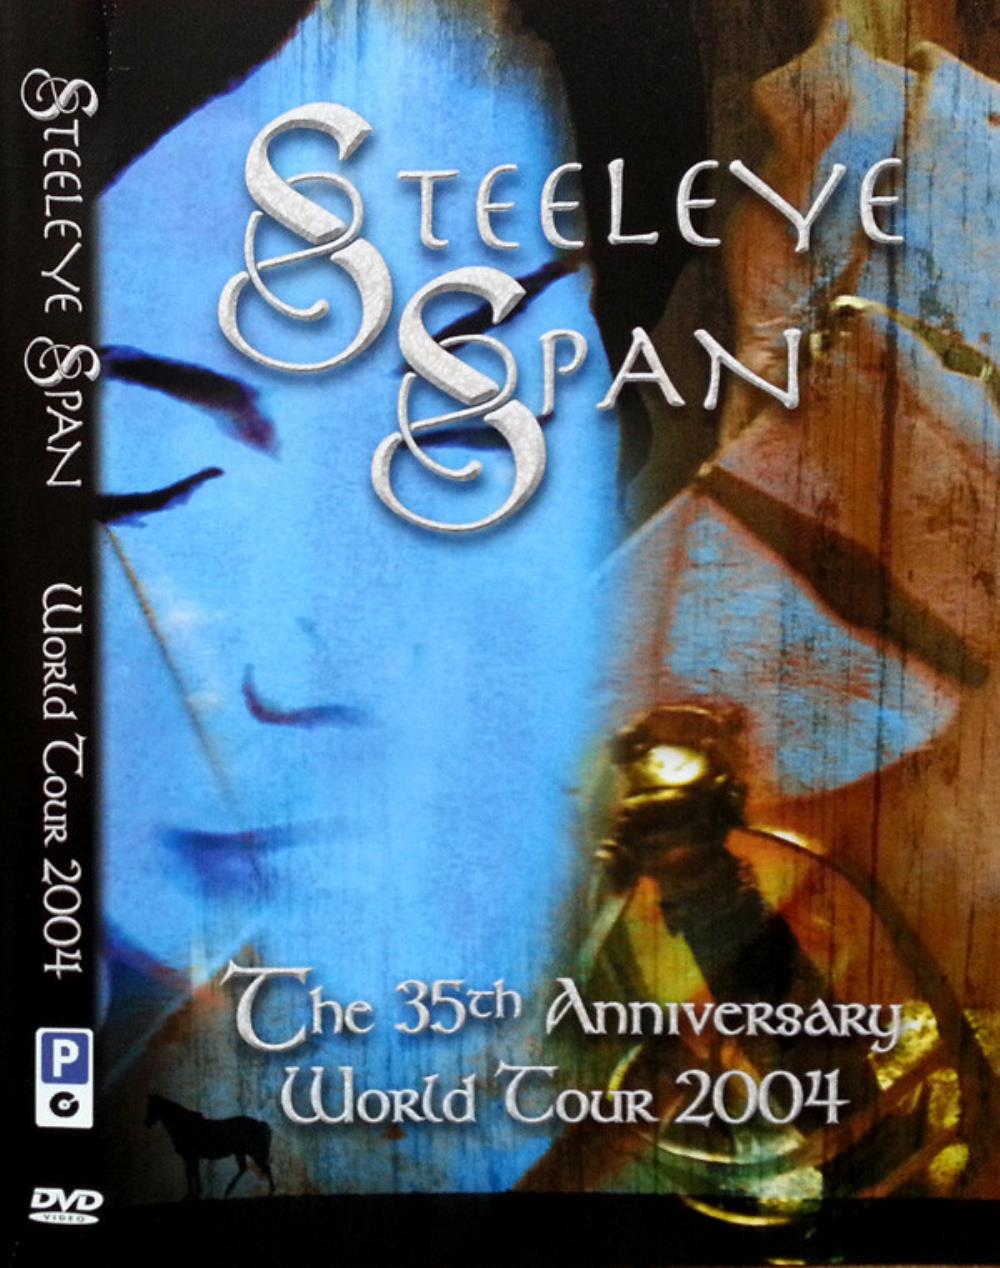 Steeleye Span The 35th Anniversary World Tour 2004 album cover